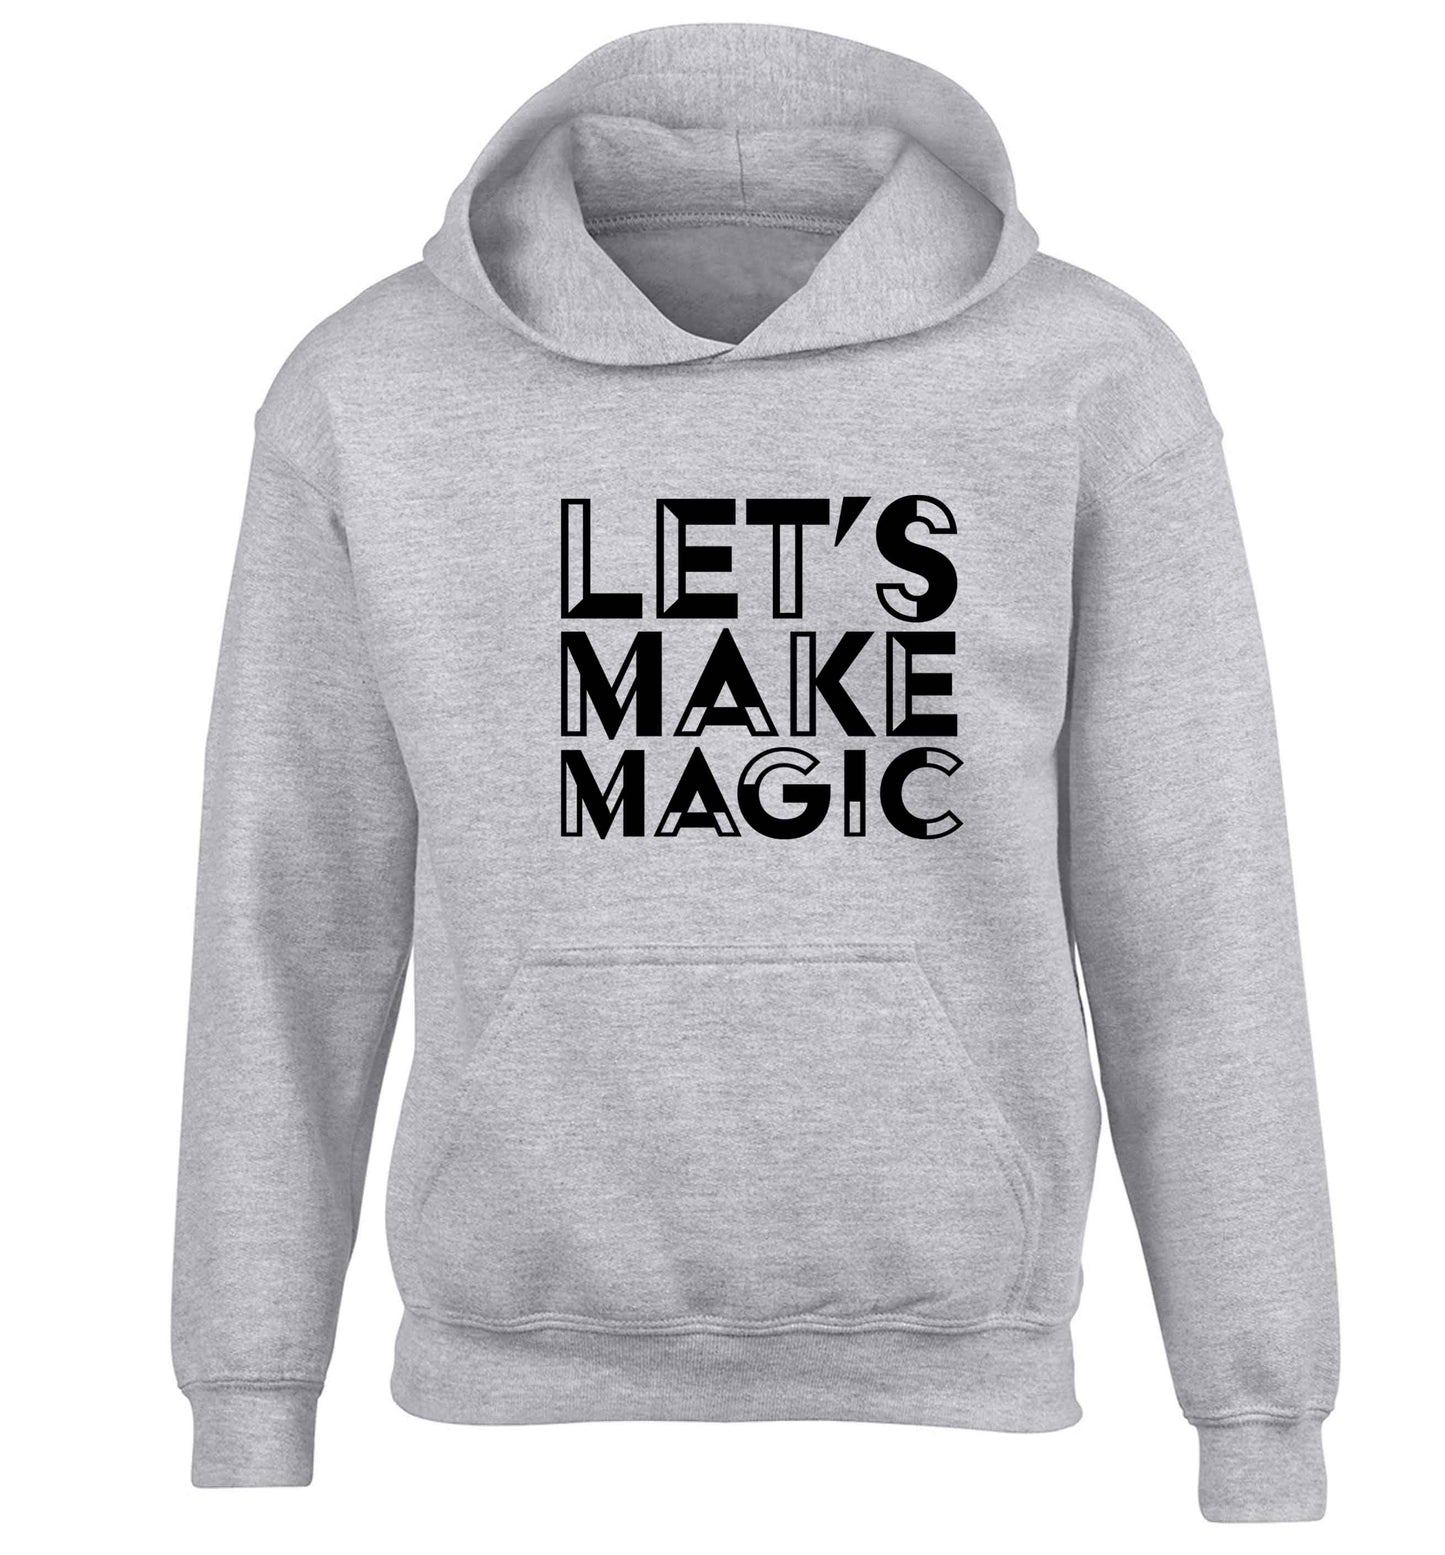 Let's make magic children's grey hoodie 12-13 Years